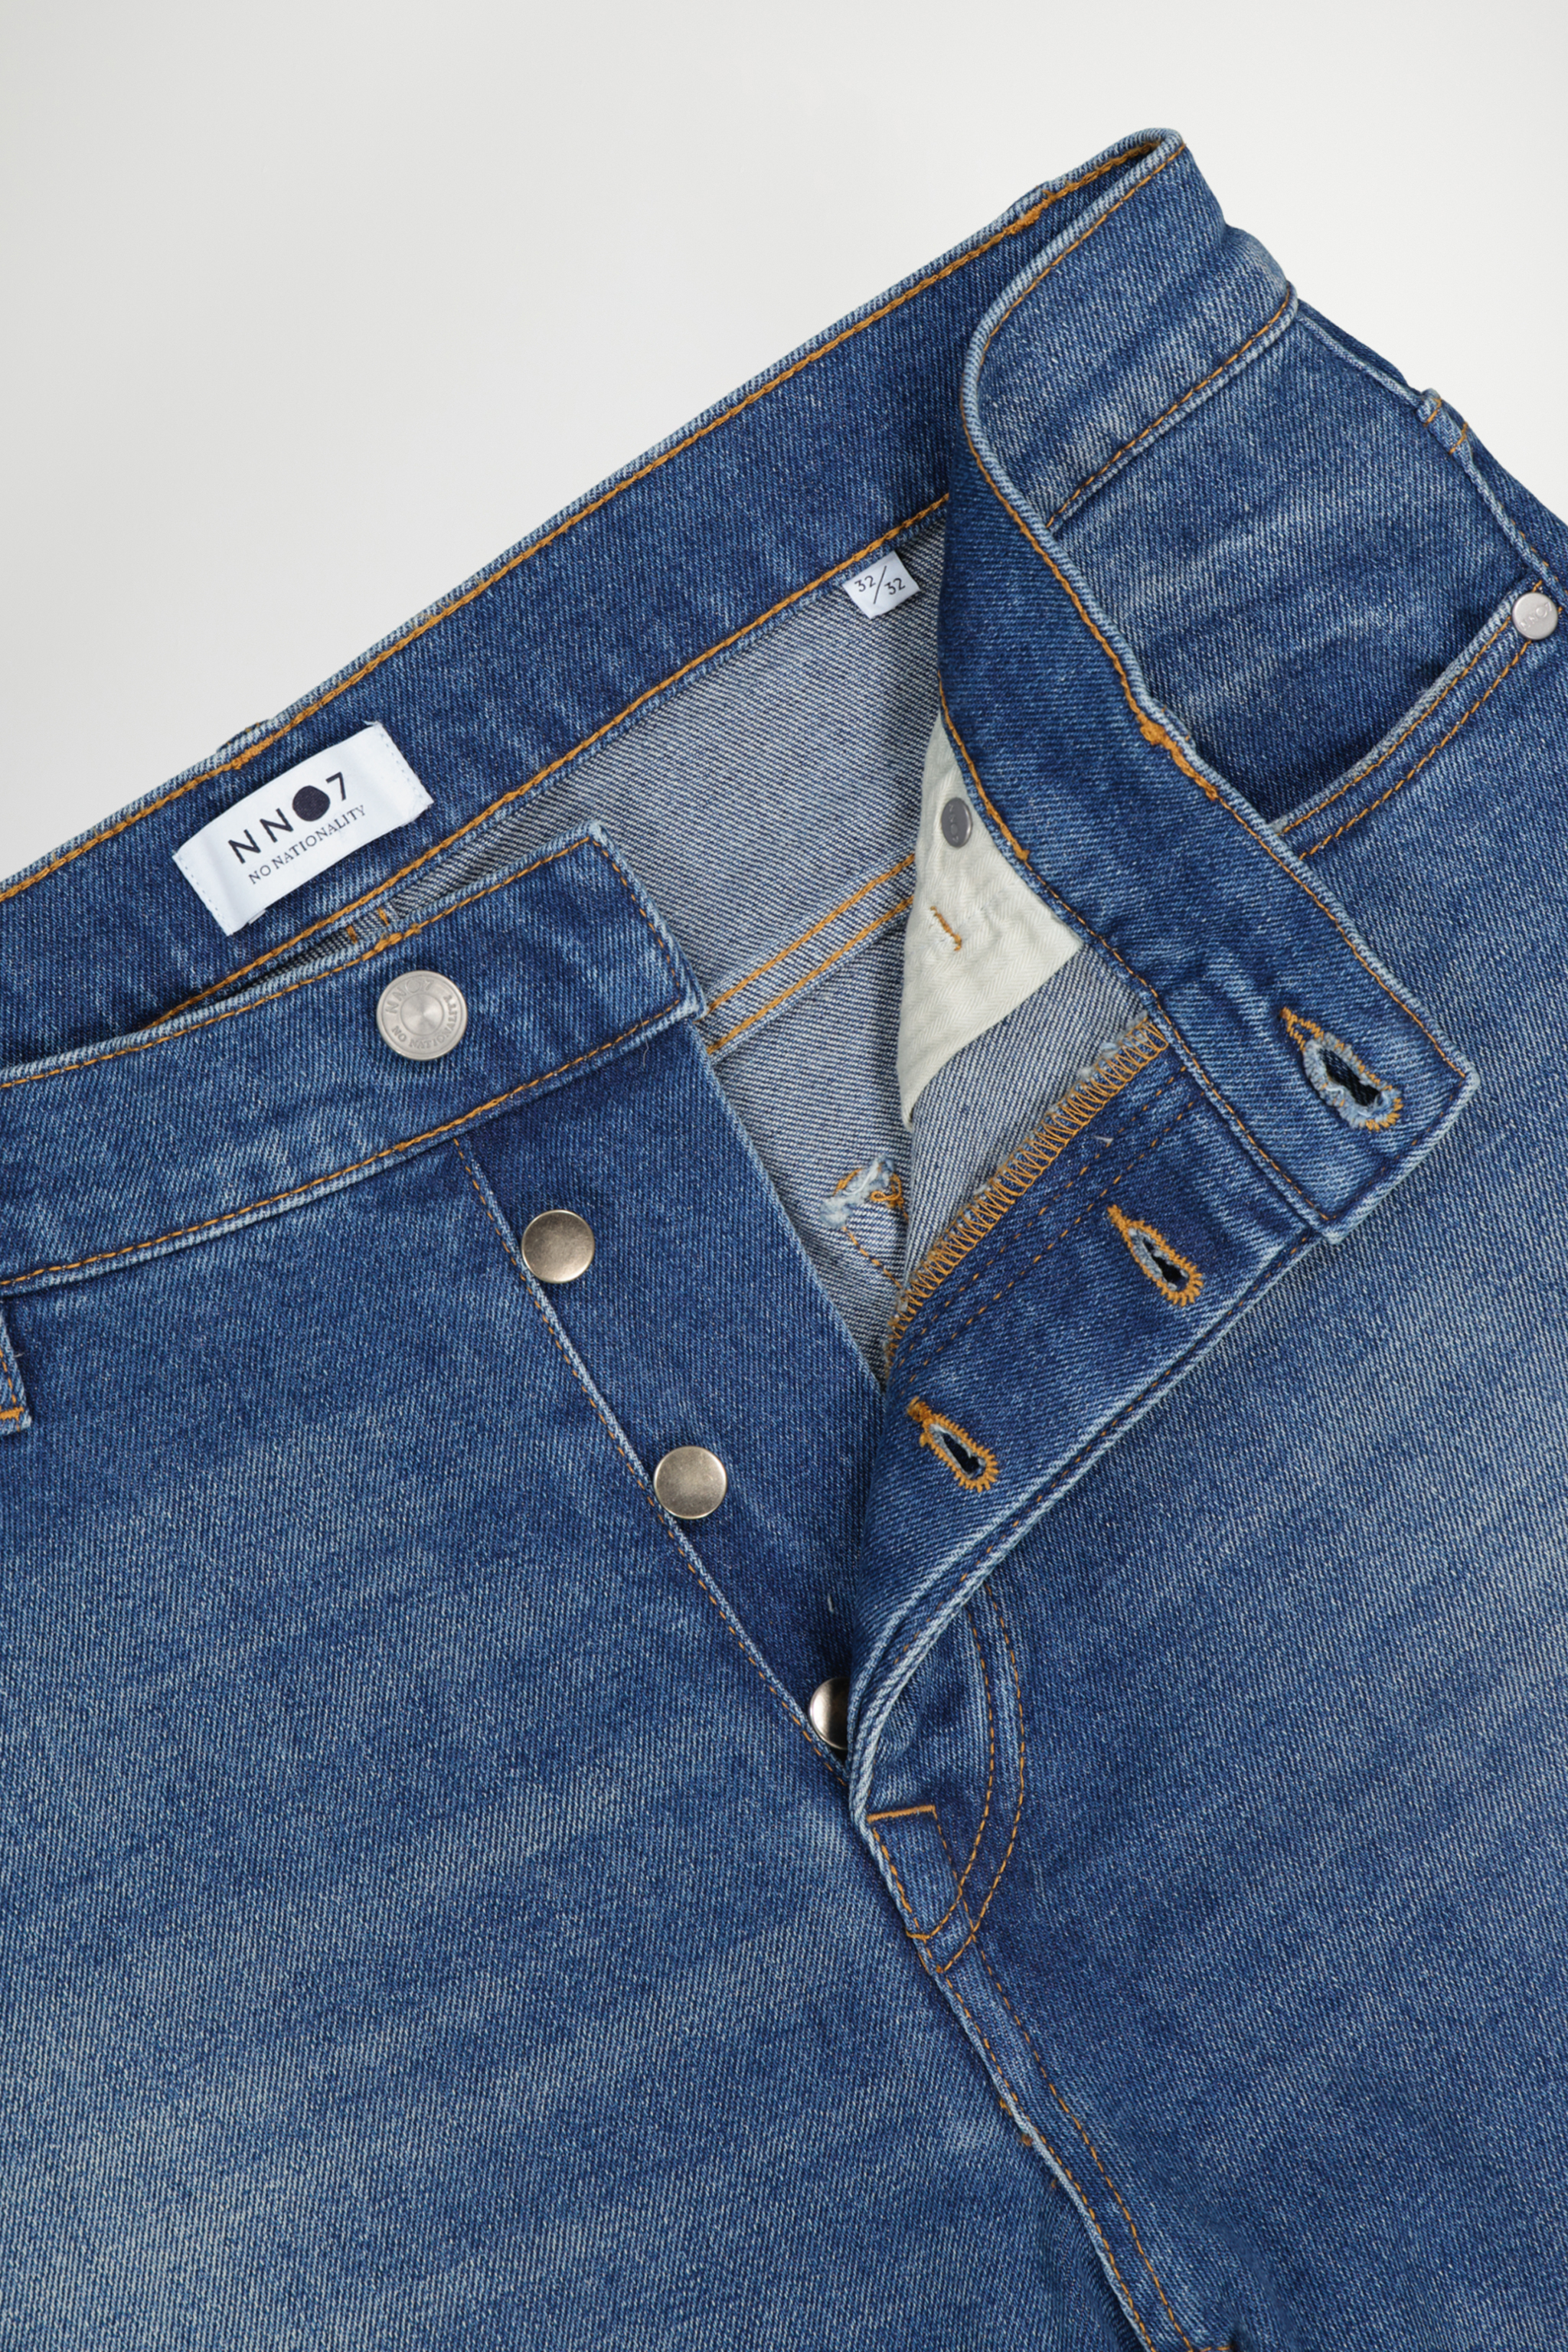 Frey 1854 men's jeans - - at NN.07®